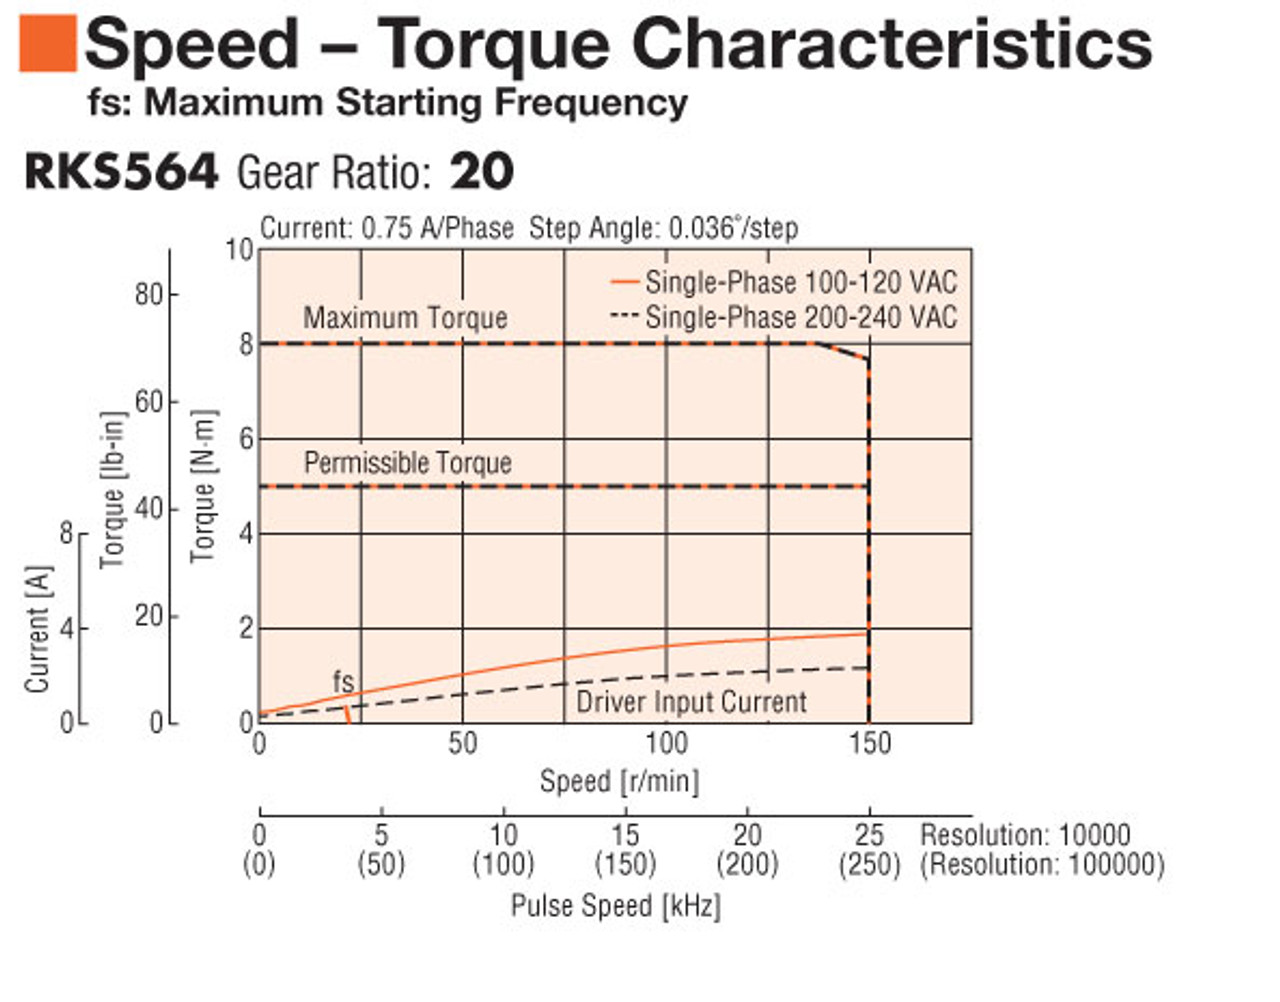 PKE564AC-TS20 - Speed-Torque